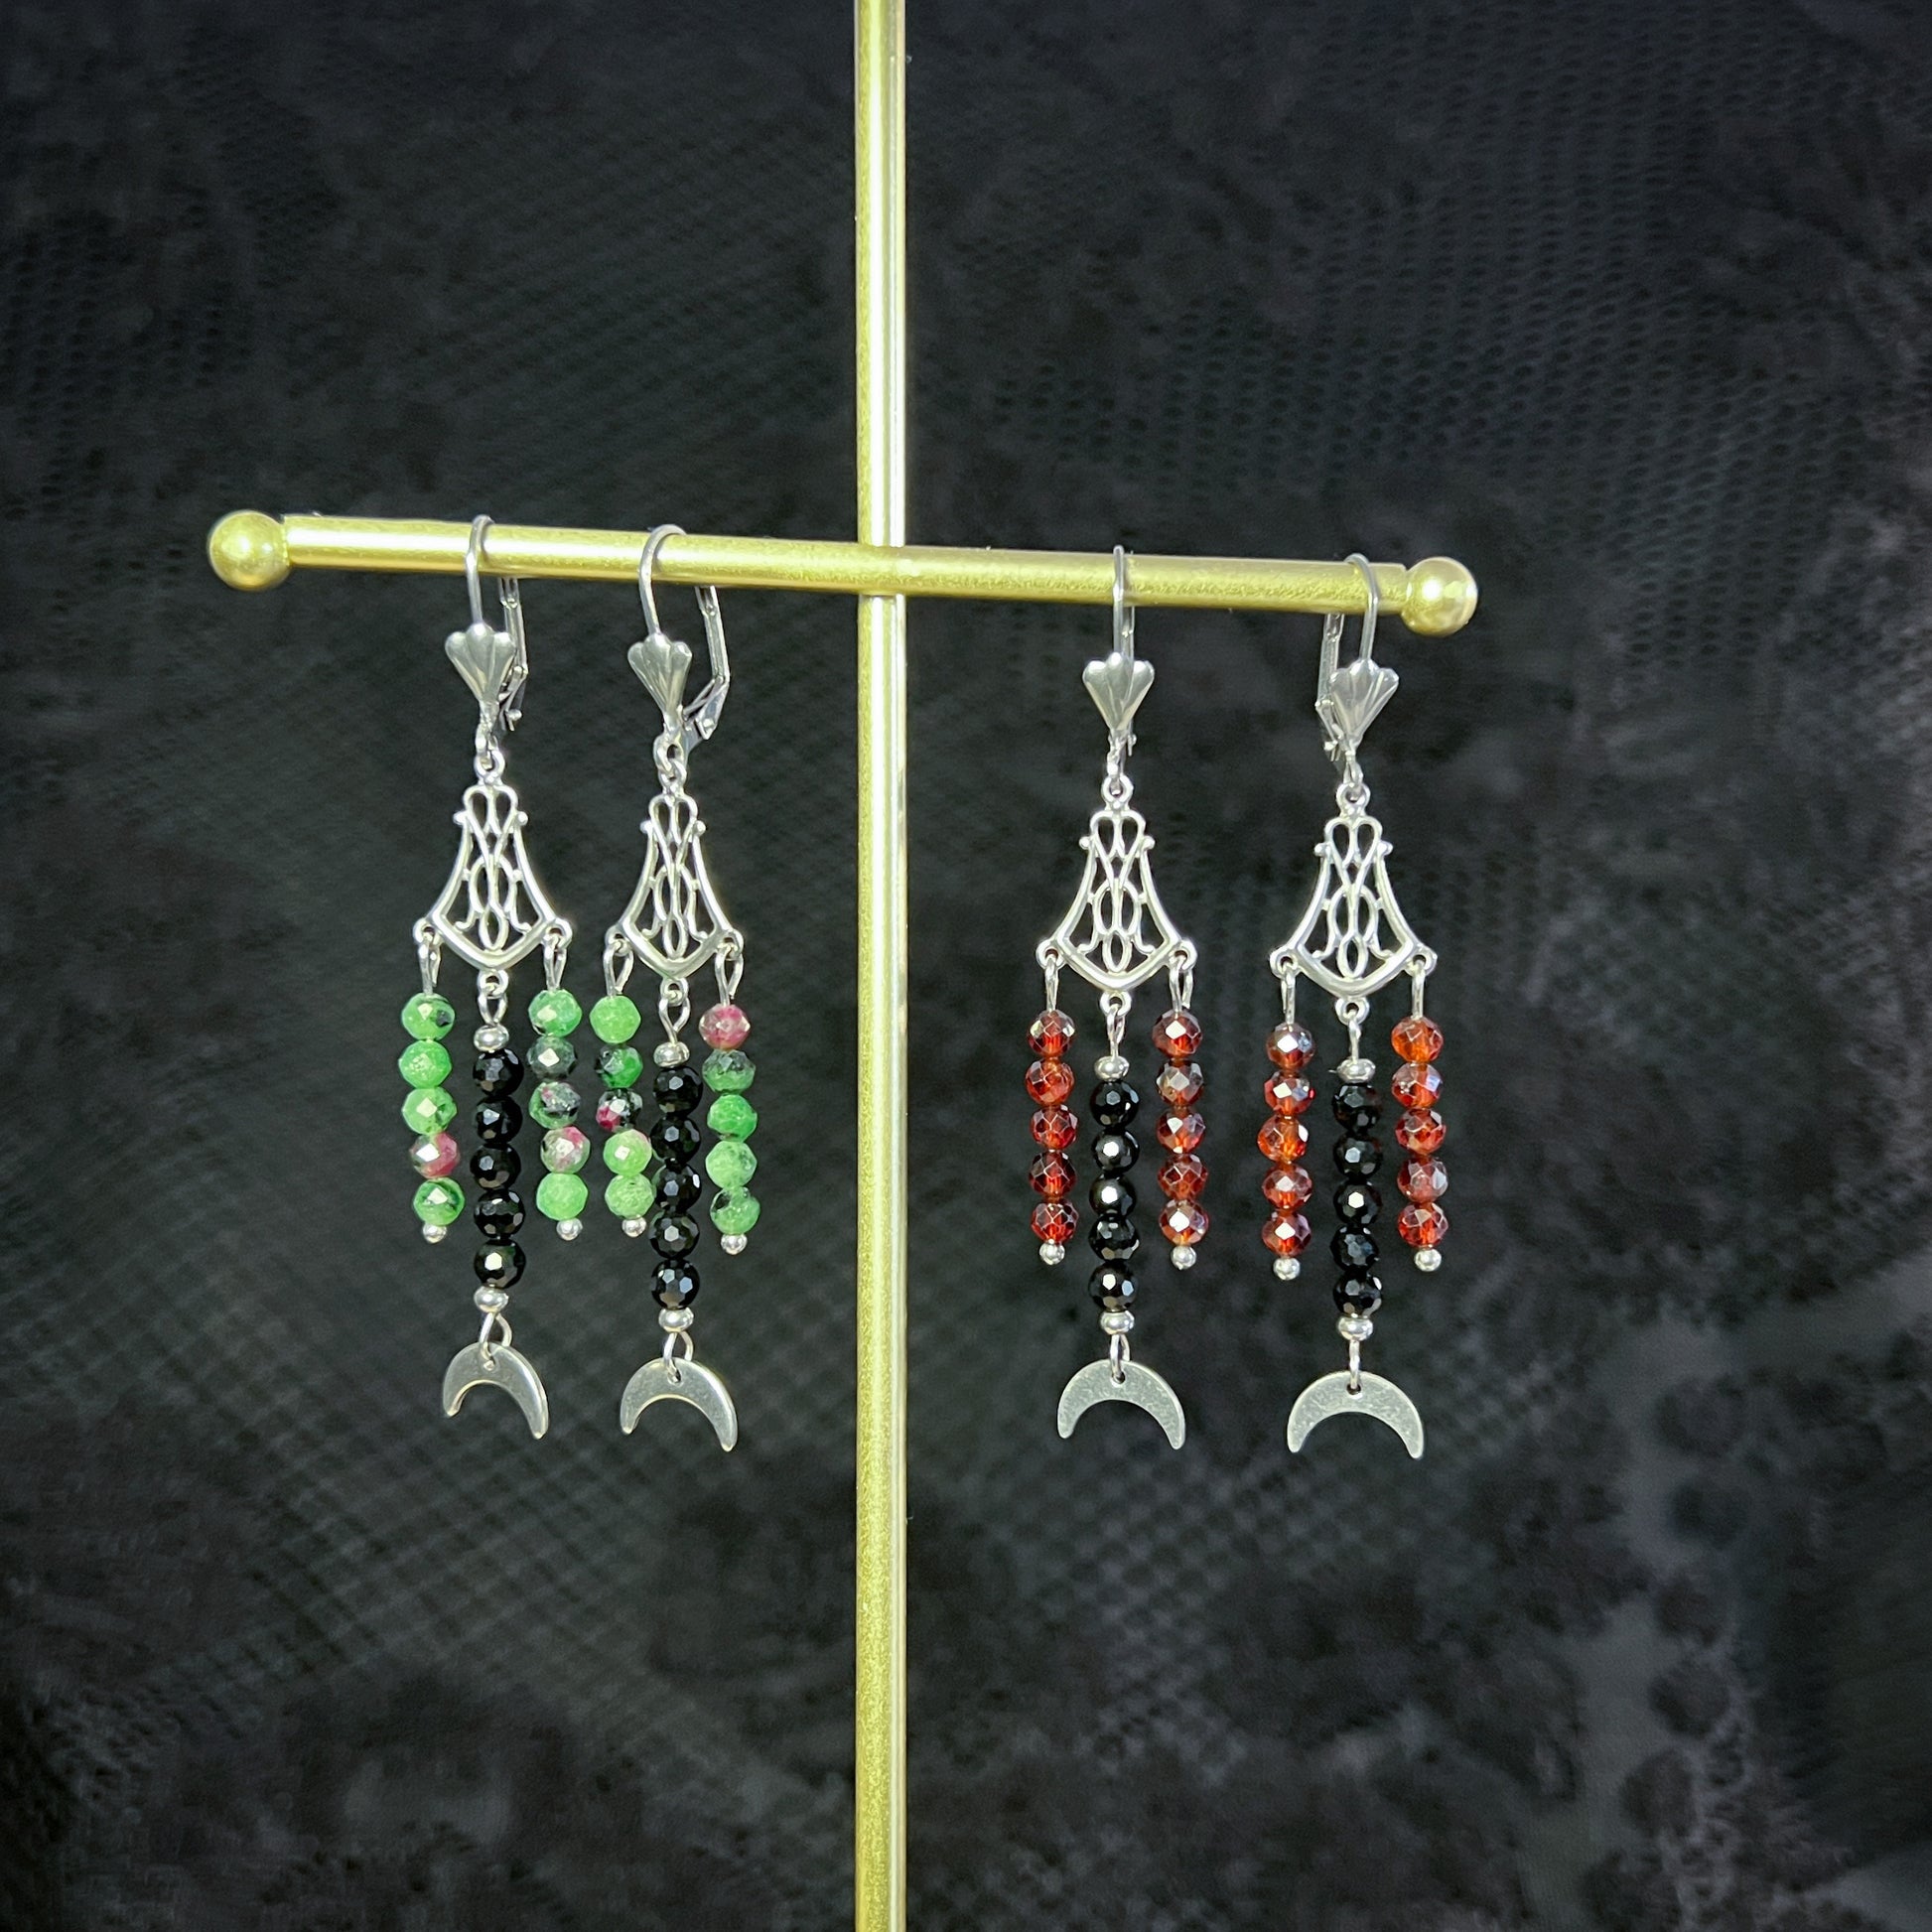 Gemstone chandelier earrings Ruby Zoisite/Onyx or Garnet/Onyx art deco retro earrings elegant stainless steel jewelry elegant gift for her